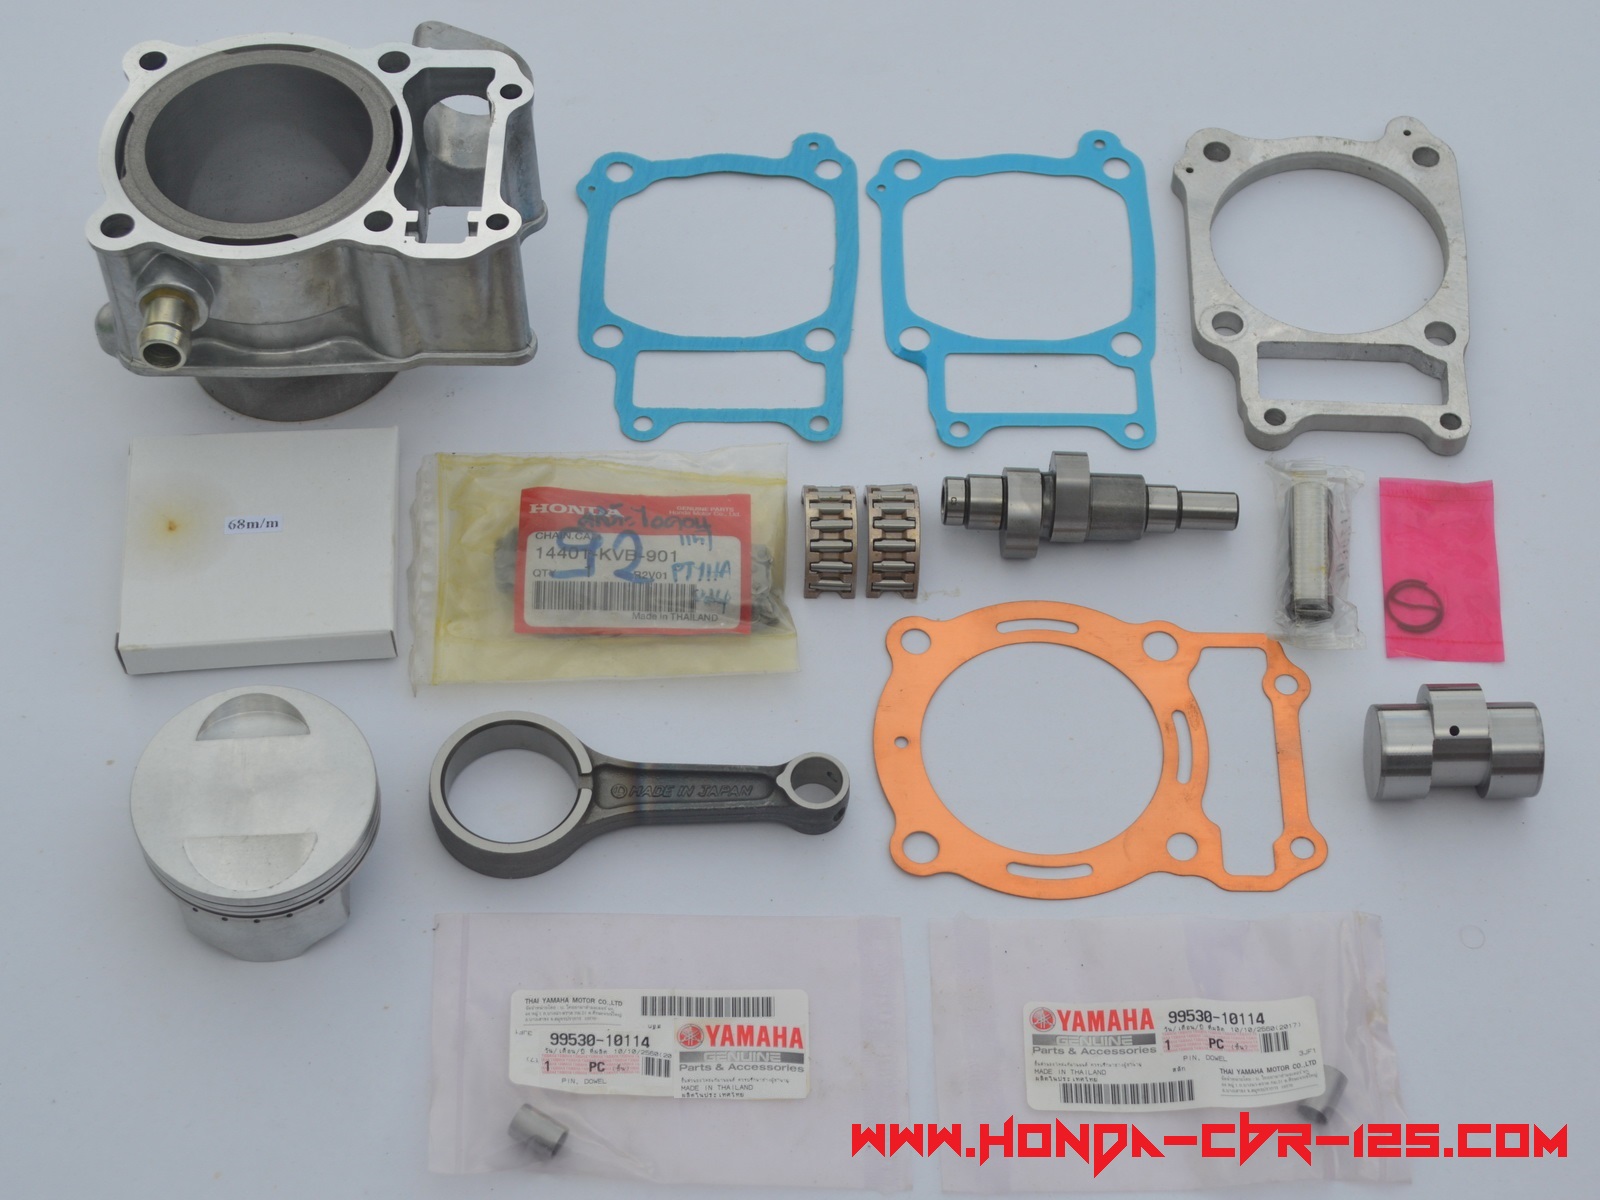 Genuine Honda CBR 125 racing part & acessories 171 ccm